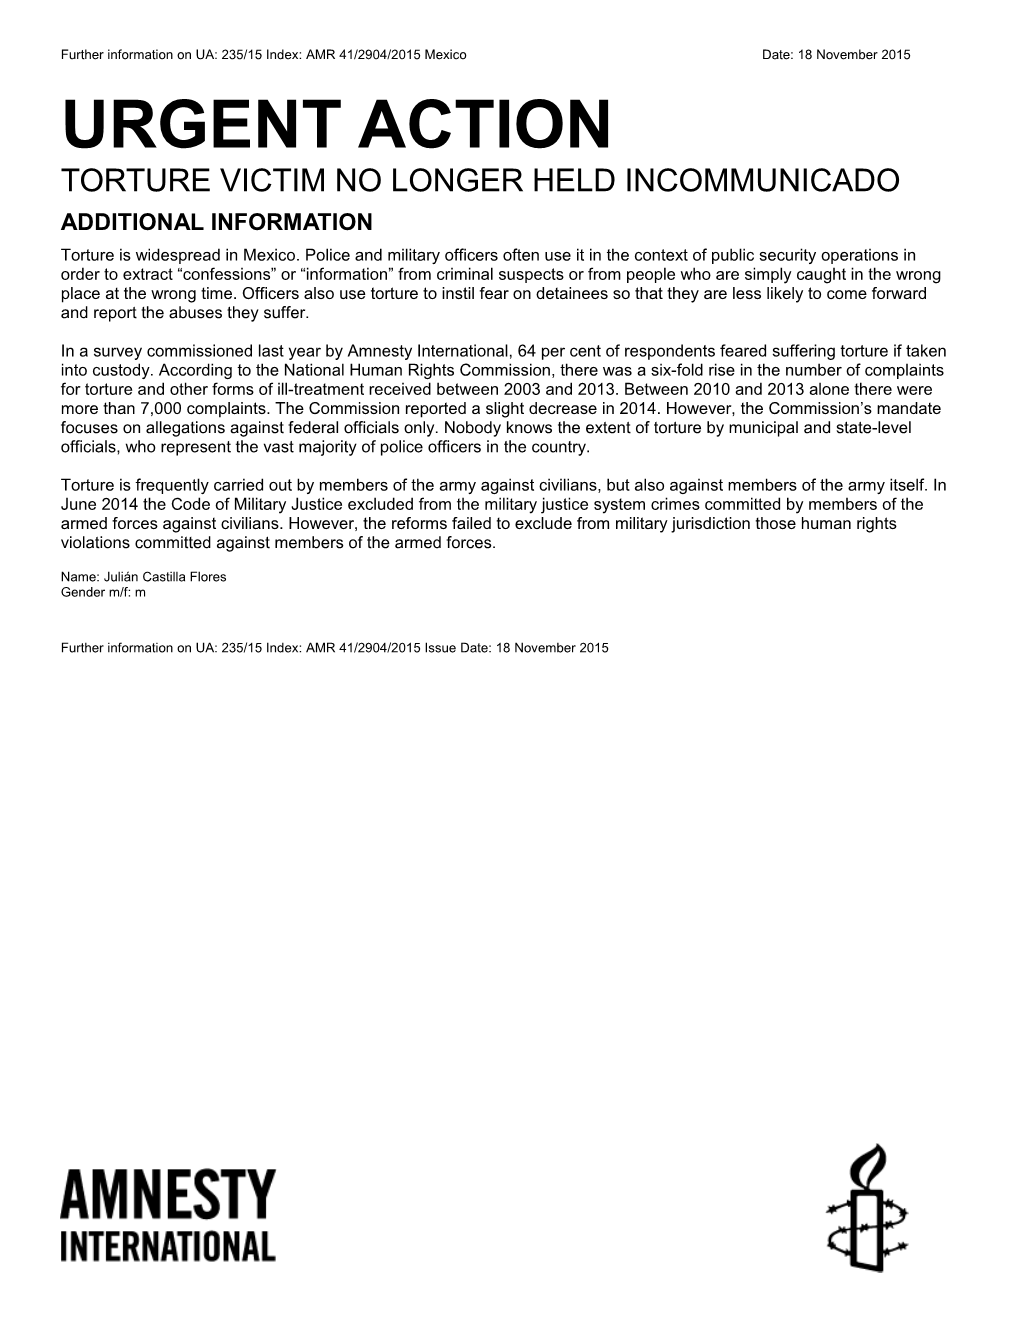 Torture Victim No Longer Held INCOMMUNICADO